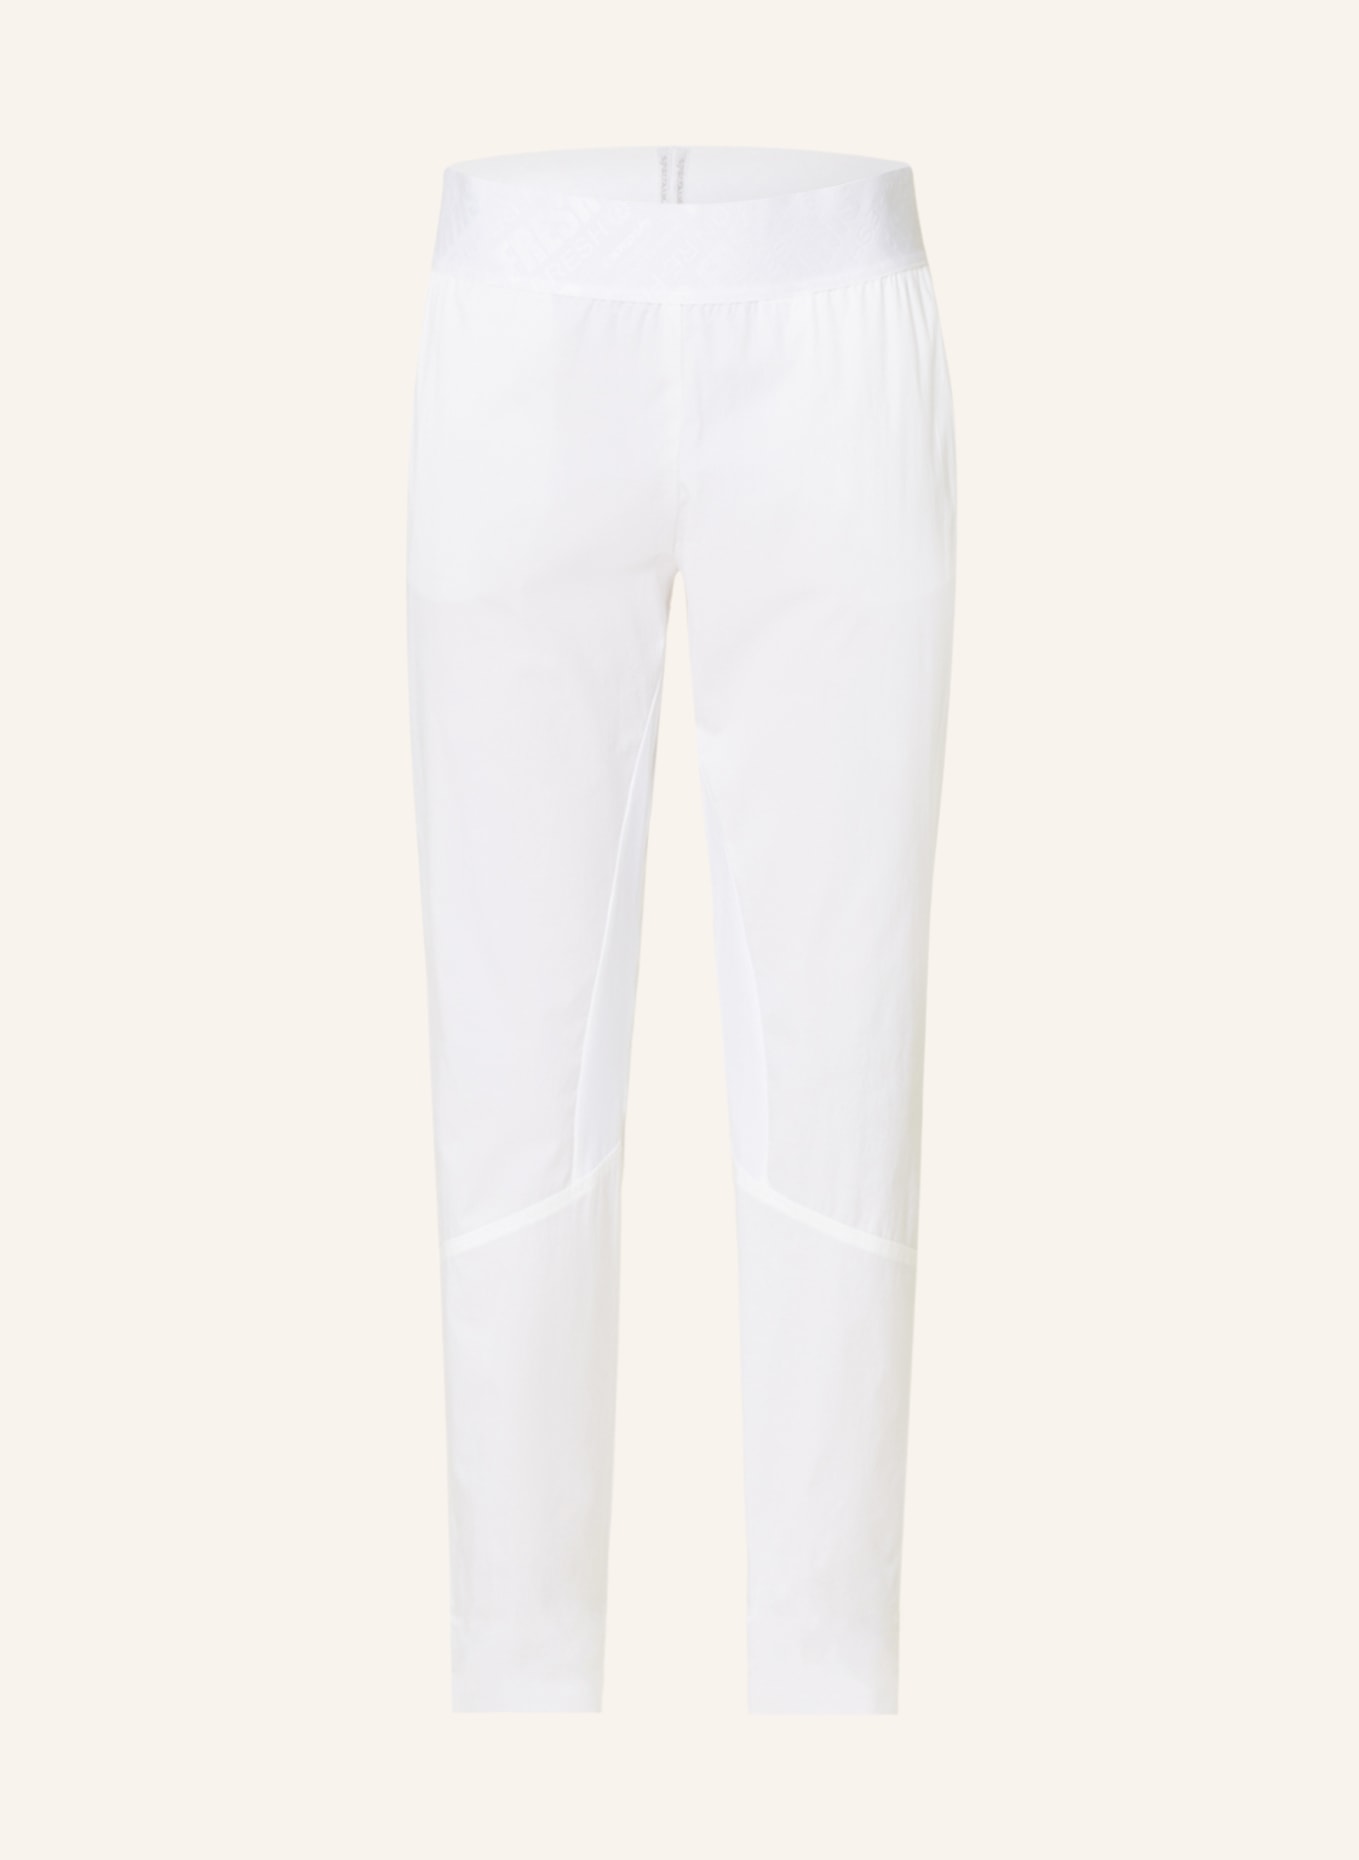 ULLI EHRLICH SPORTALM Pants in jogger style, Color: WHITE (Image 1)